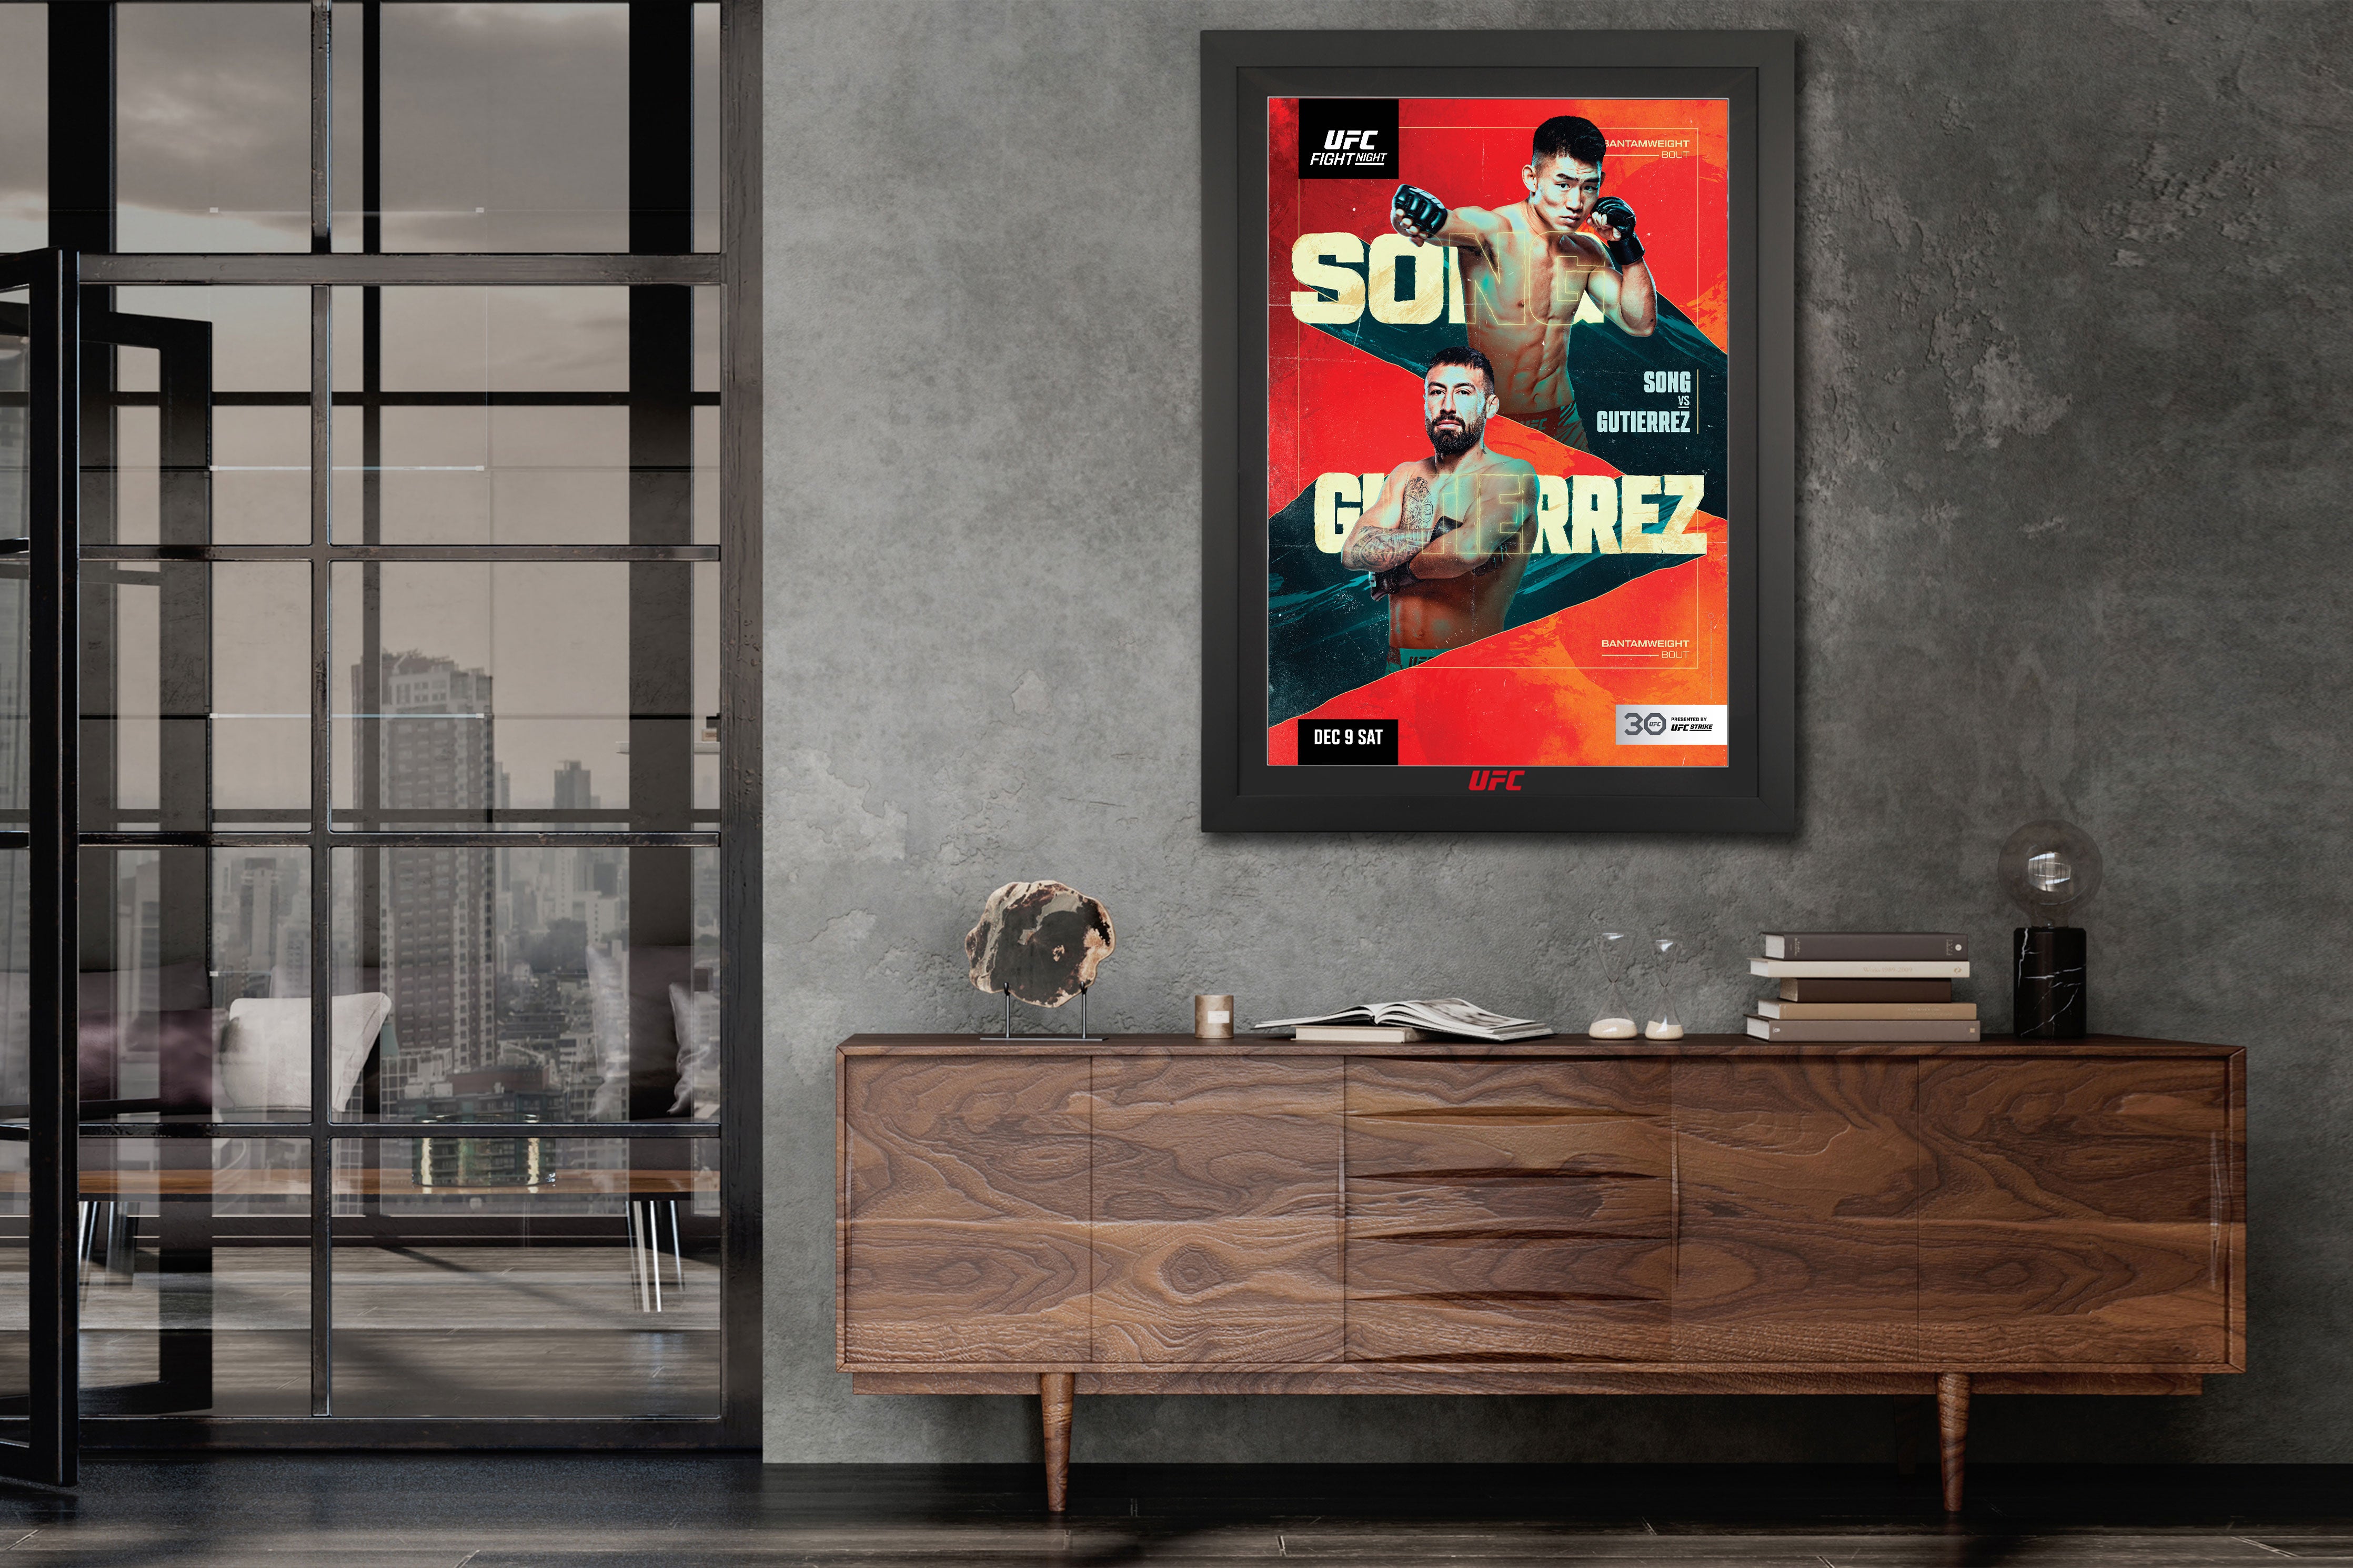 UFC Fight Night: Song vs Gutiérrez Autographed Poster